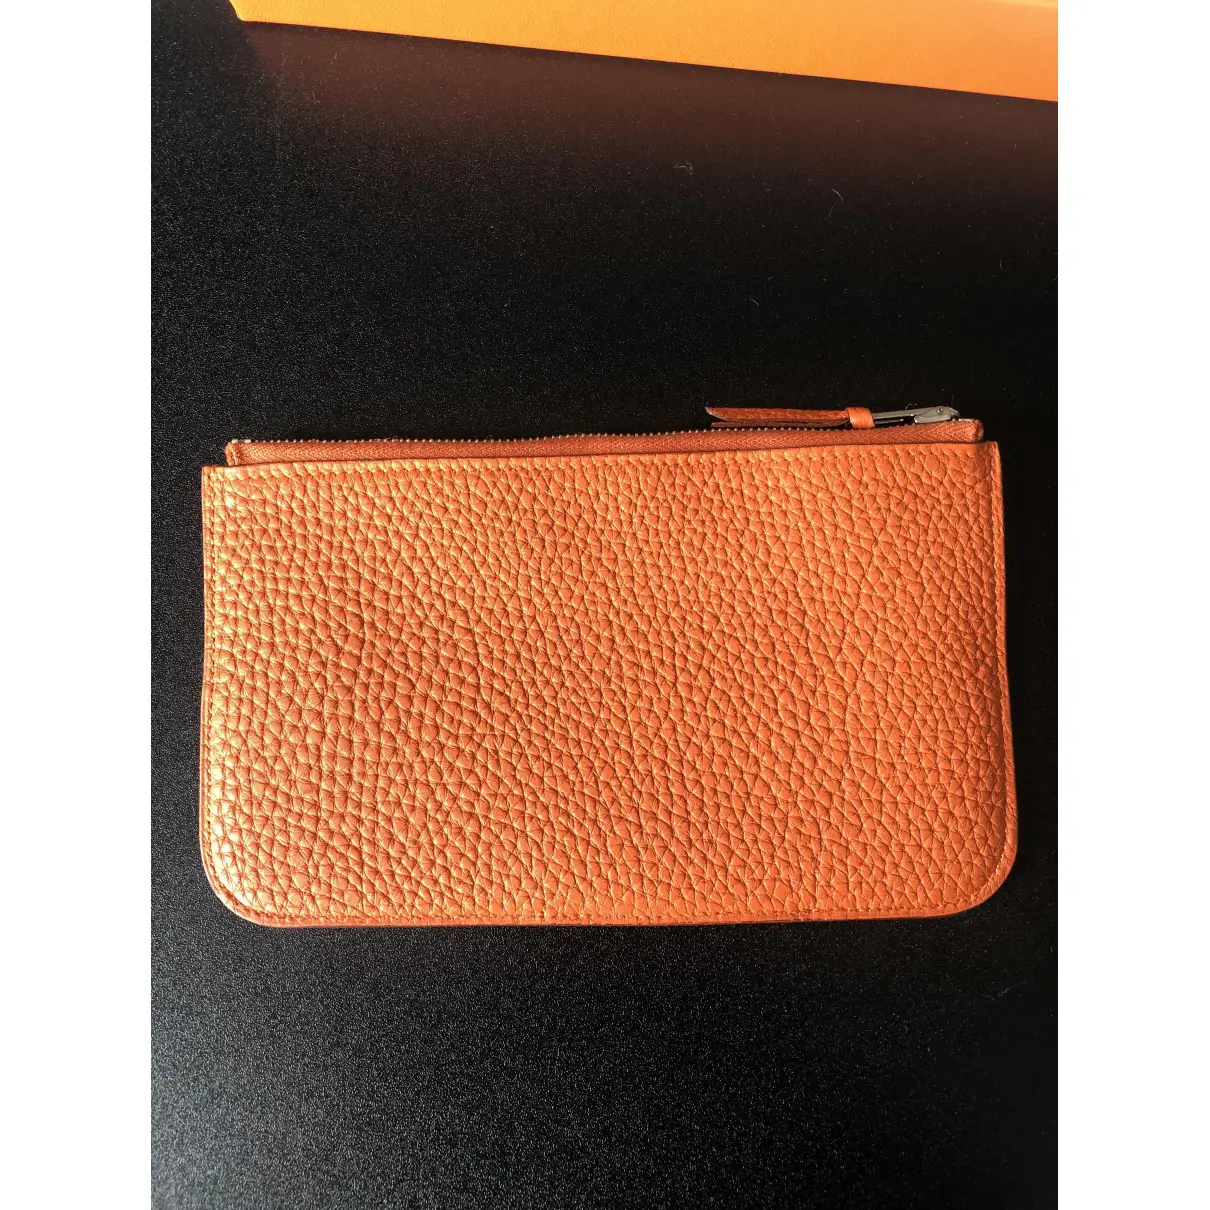 Buy Hermès Dogon leather wallet online